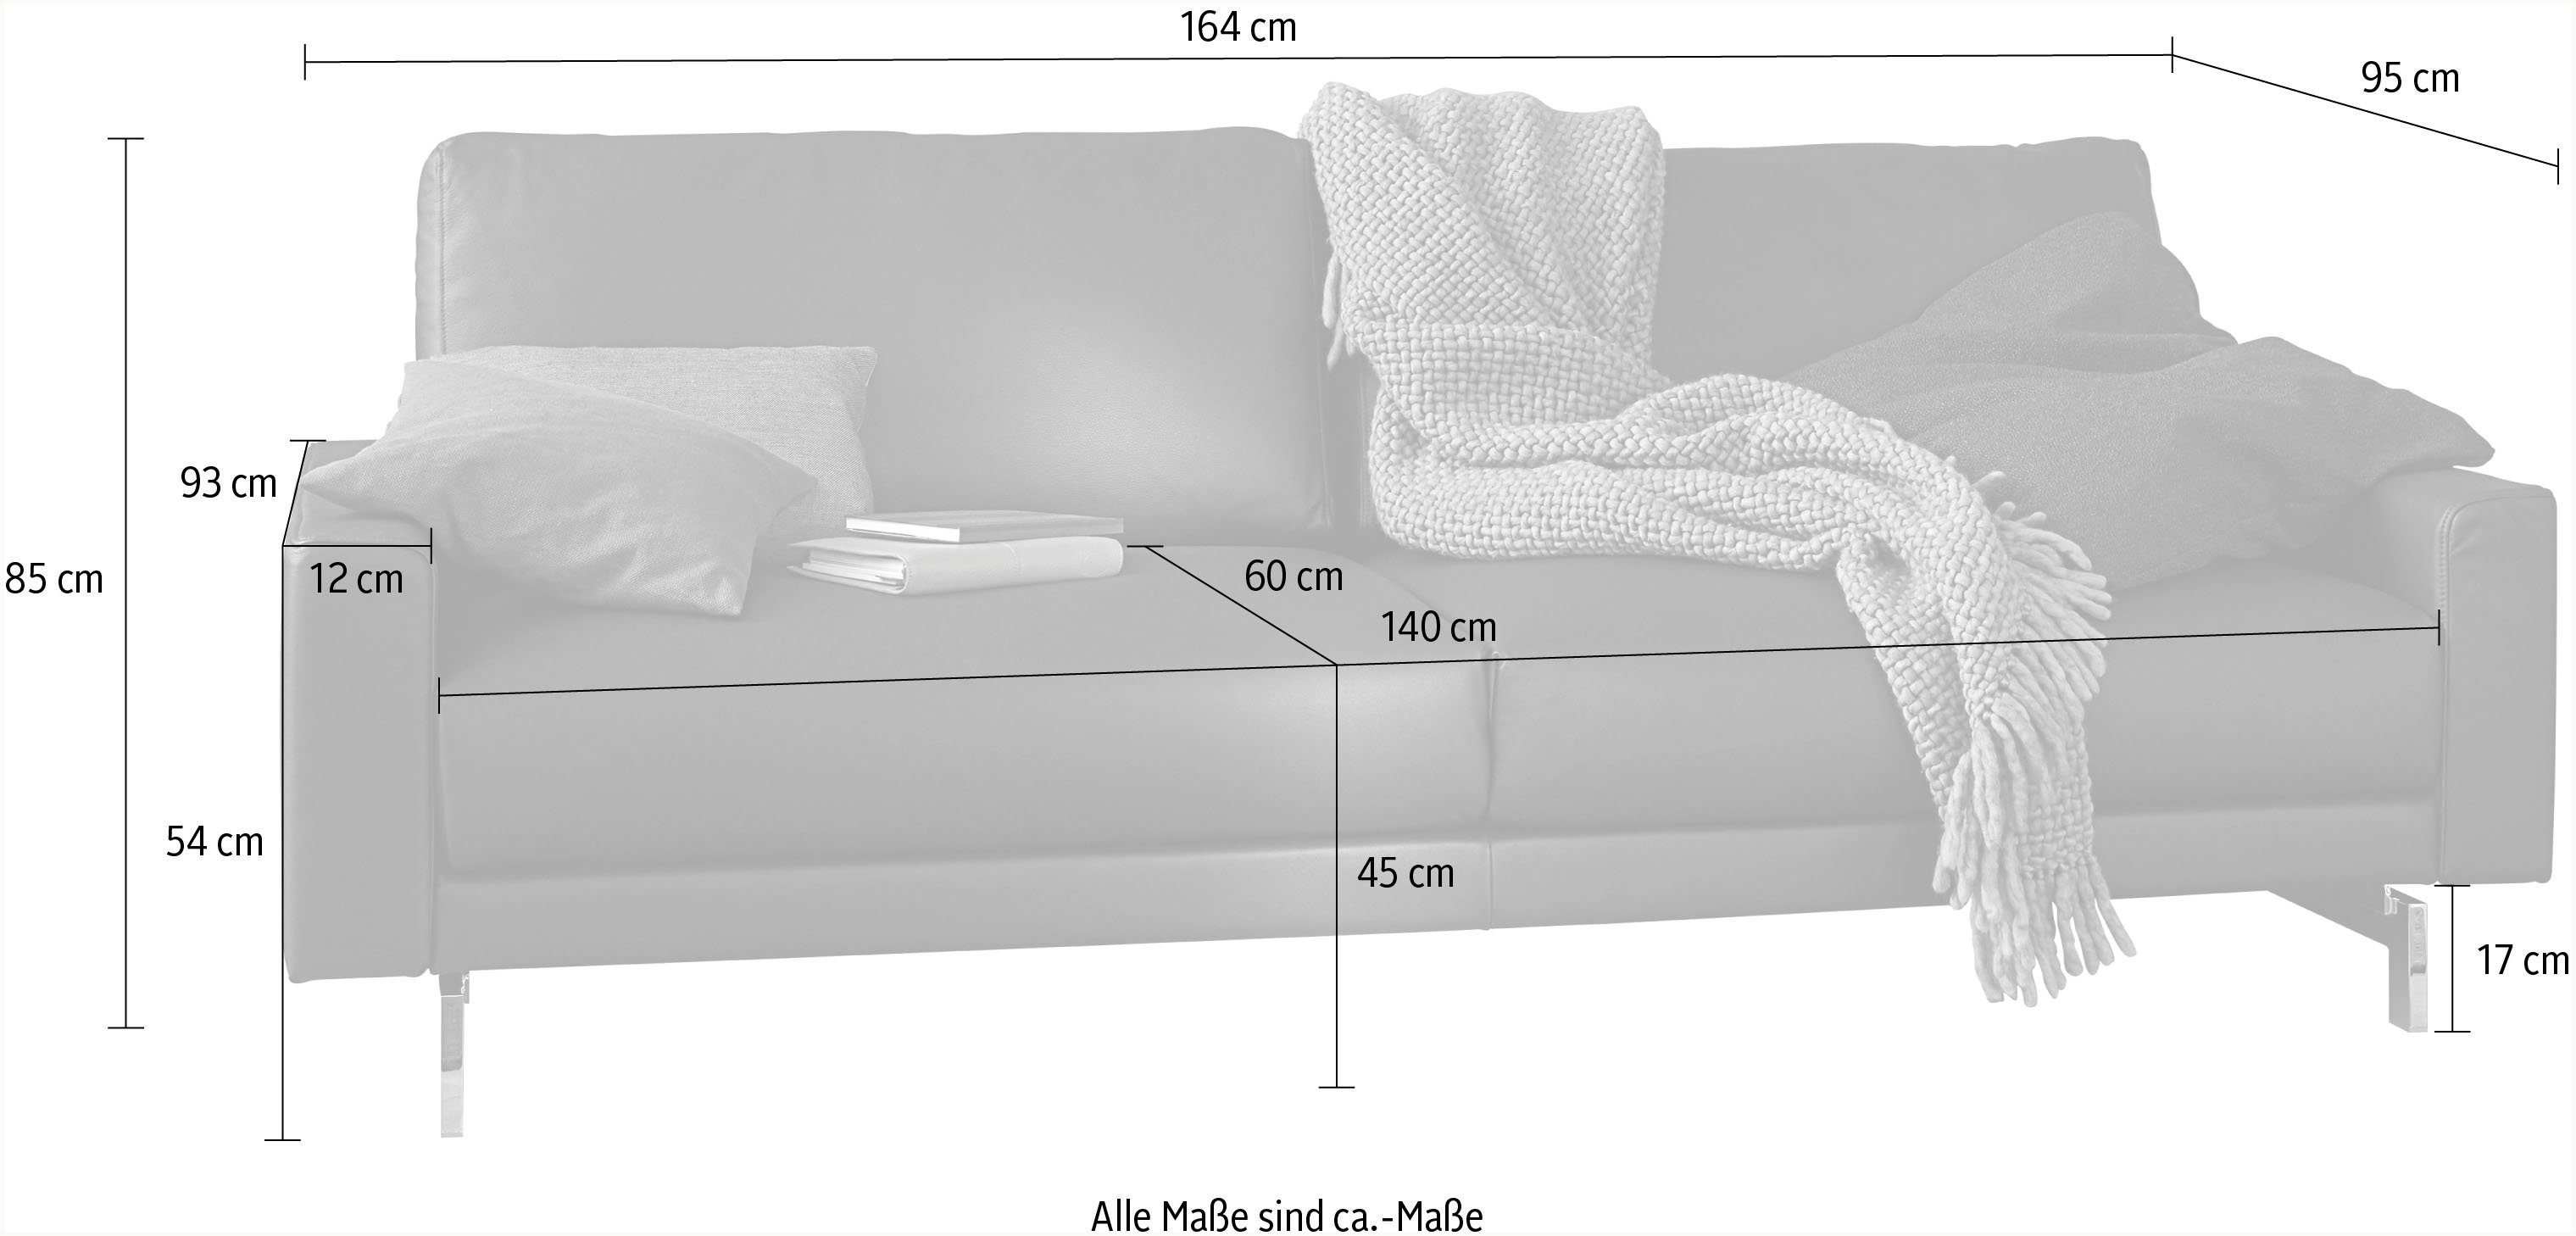 hs.450, niedrig, Fuß 164 cm Breite glänzend, hülsta sofa chromfarben 2-Sitzer Armlehne